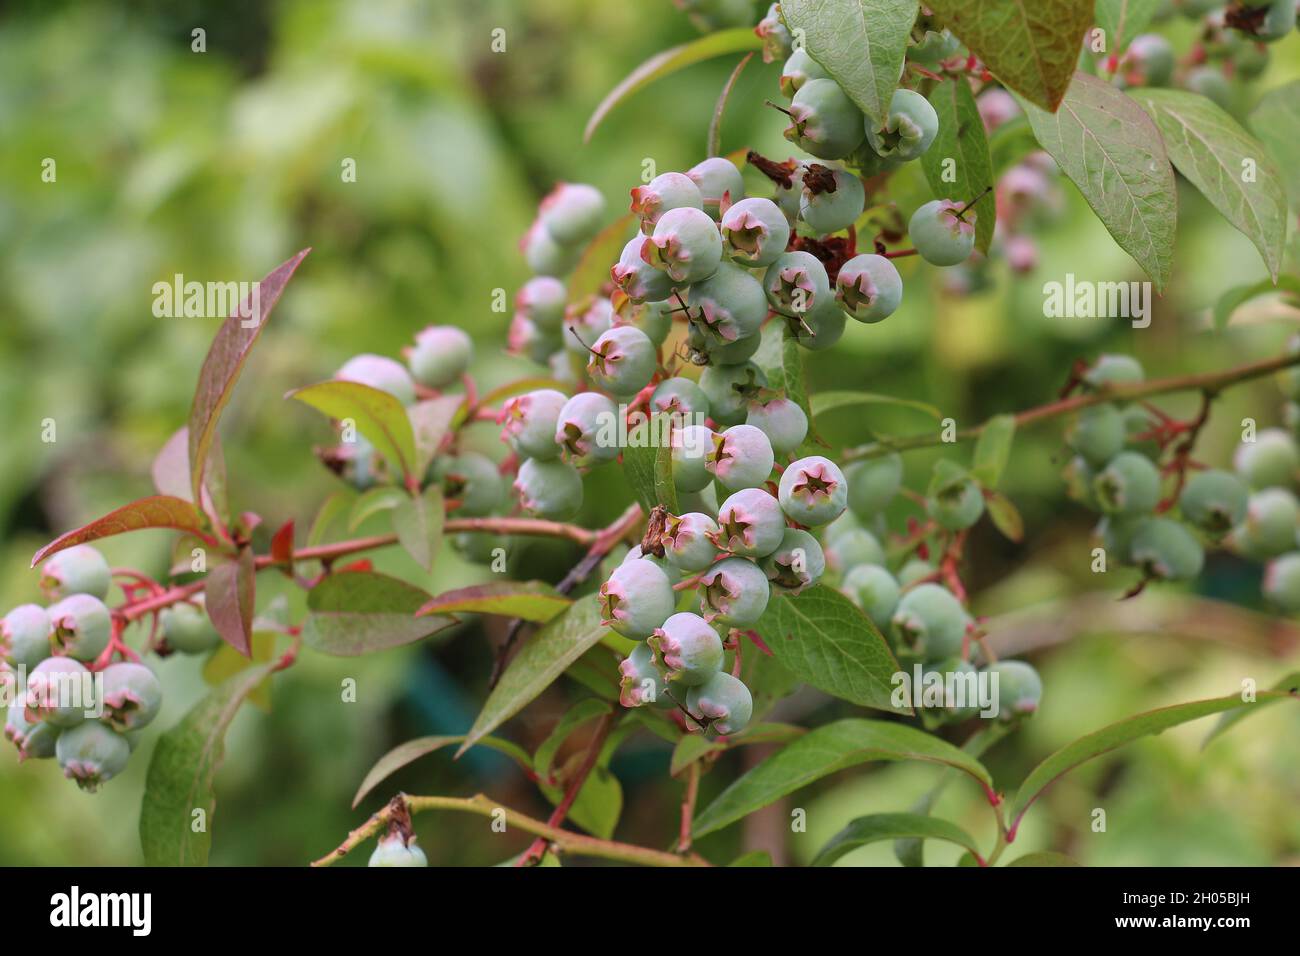 Blueberries, Vaccinium corymbosum, green berries ripening on a blueberry bush Stock Photo